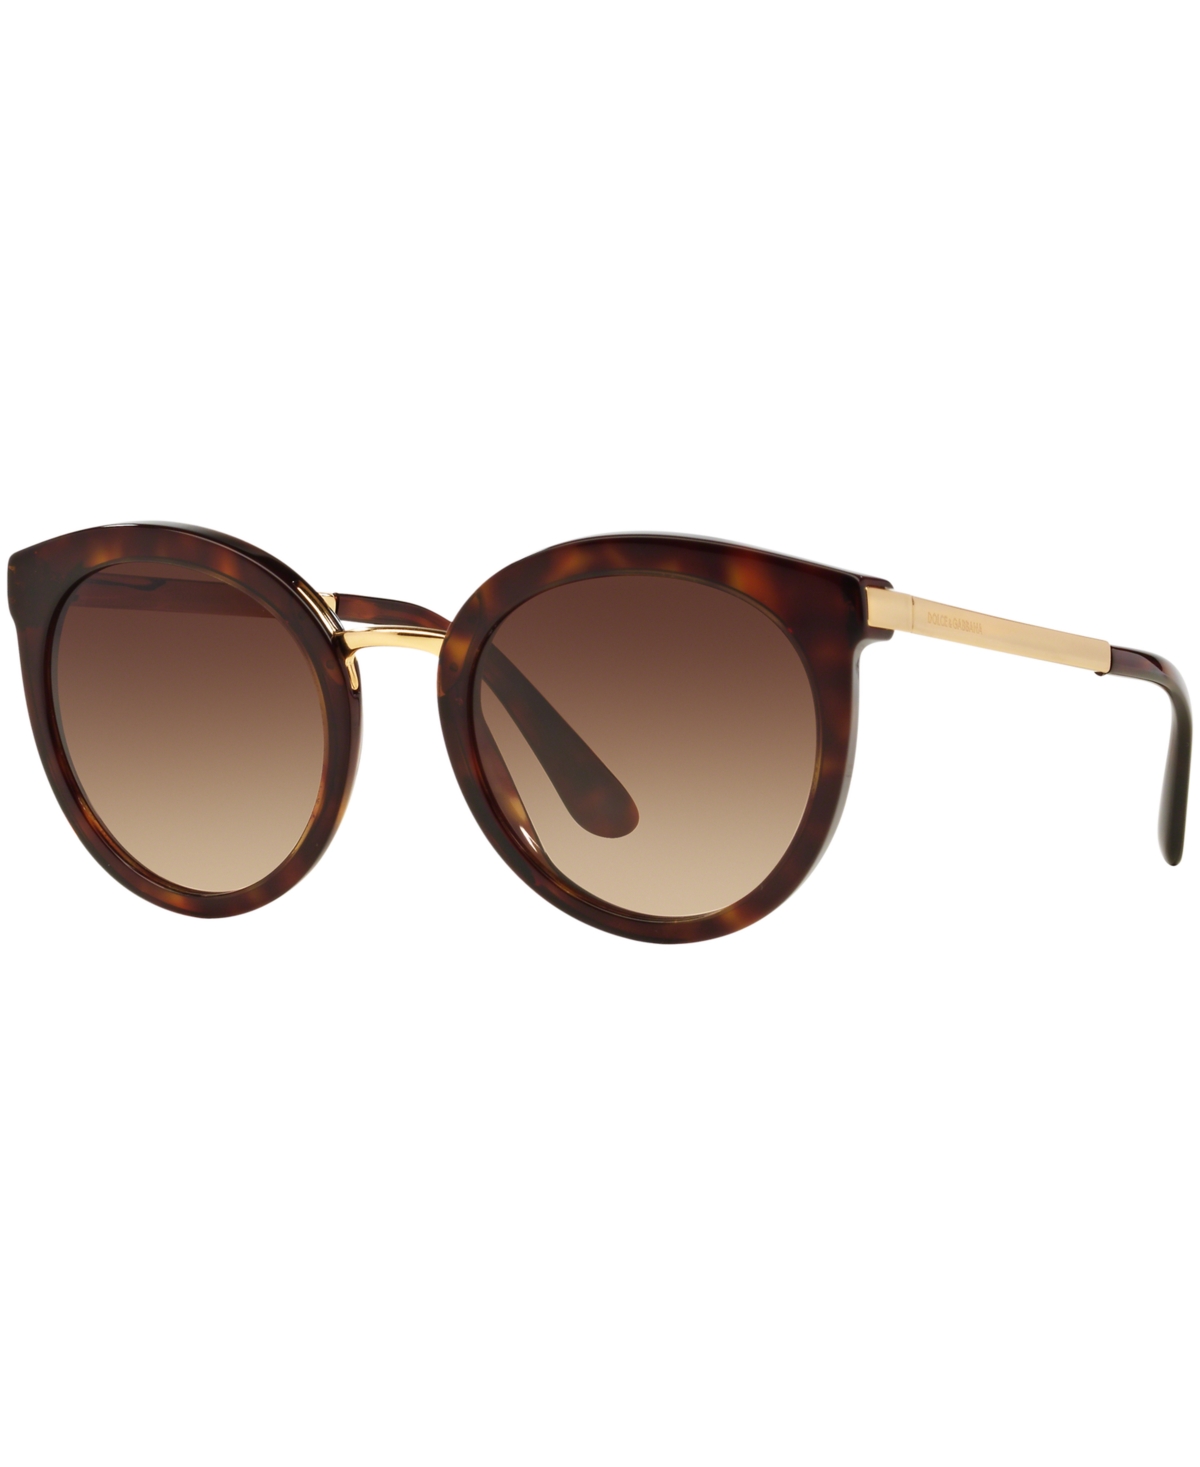 Dolce & Gabbana Sunglasses, Dg4268 In Tortoise,brown Gradient